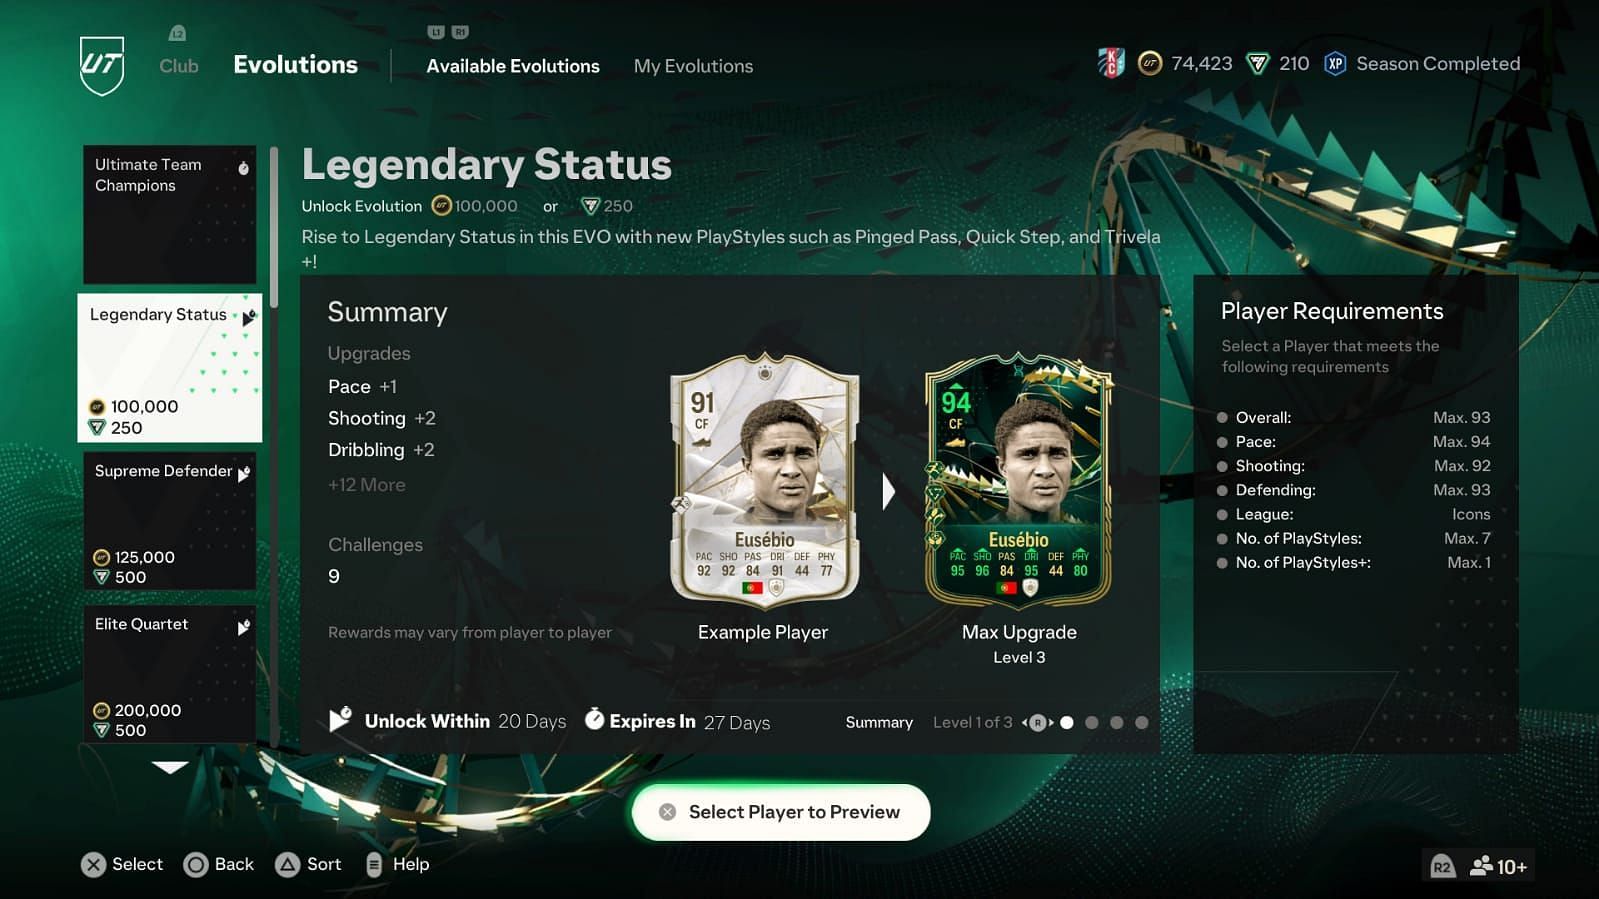 Eusebio can be upgraded (Image via EA Sports)